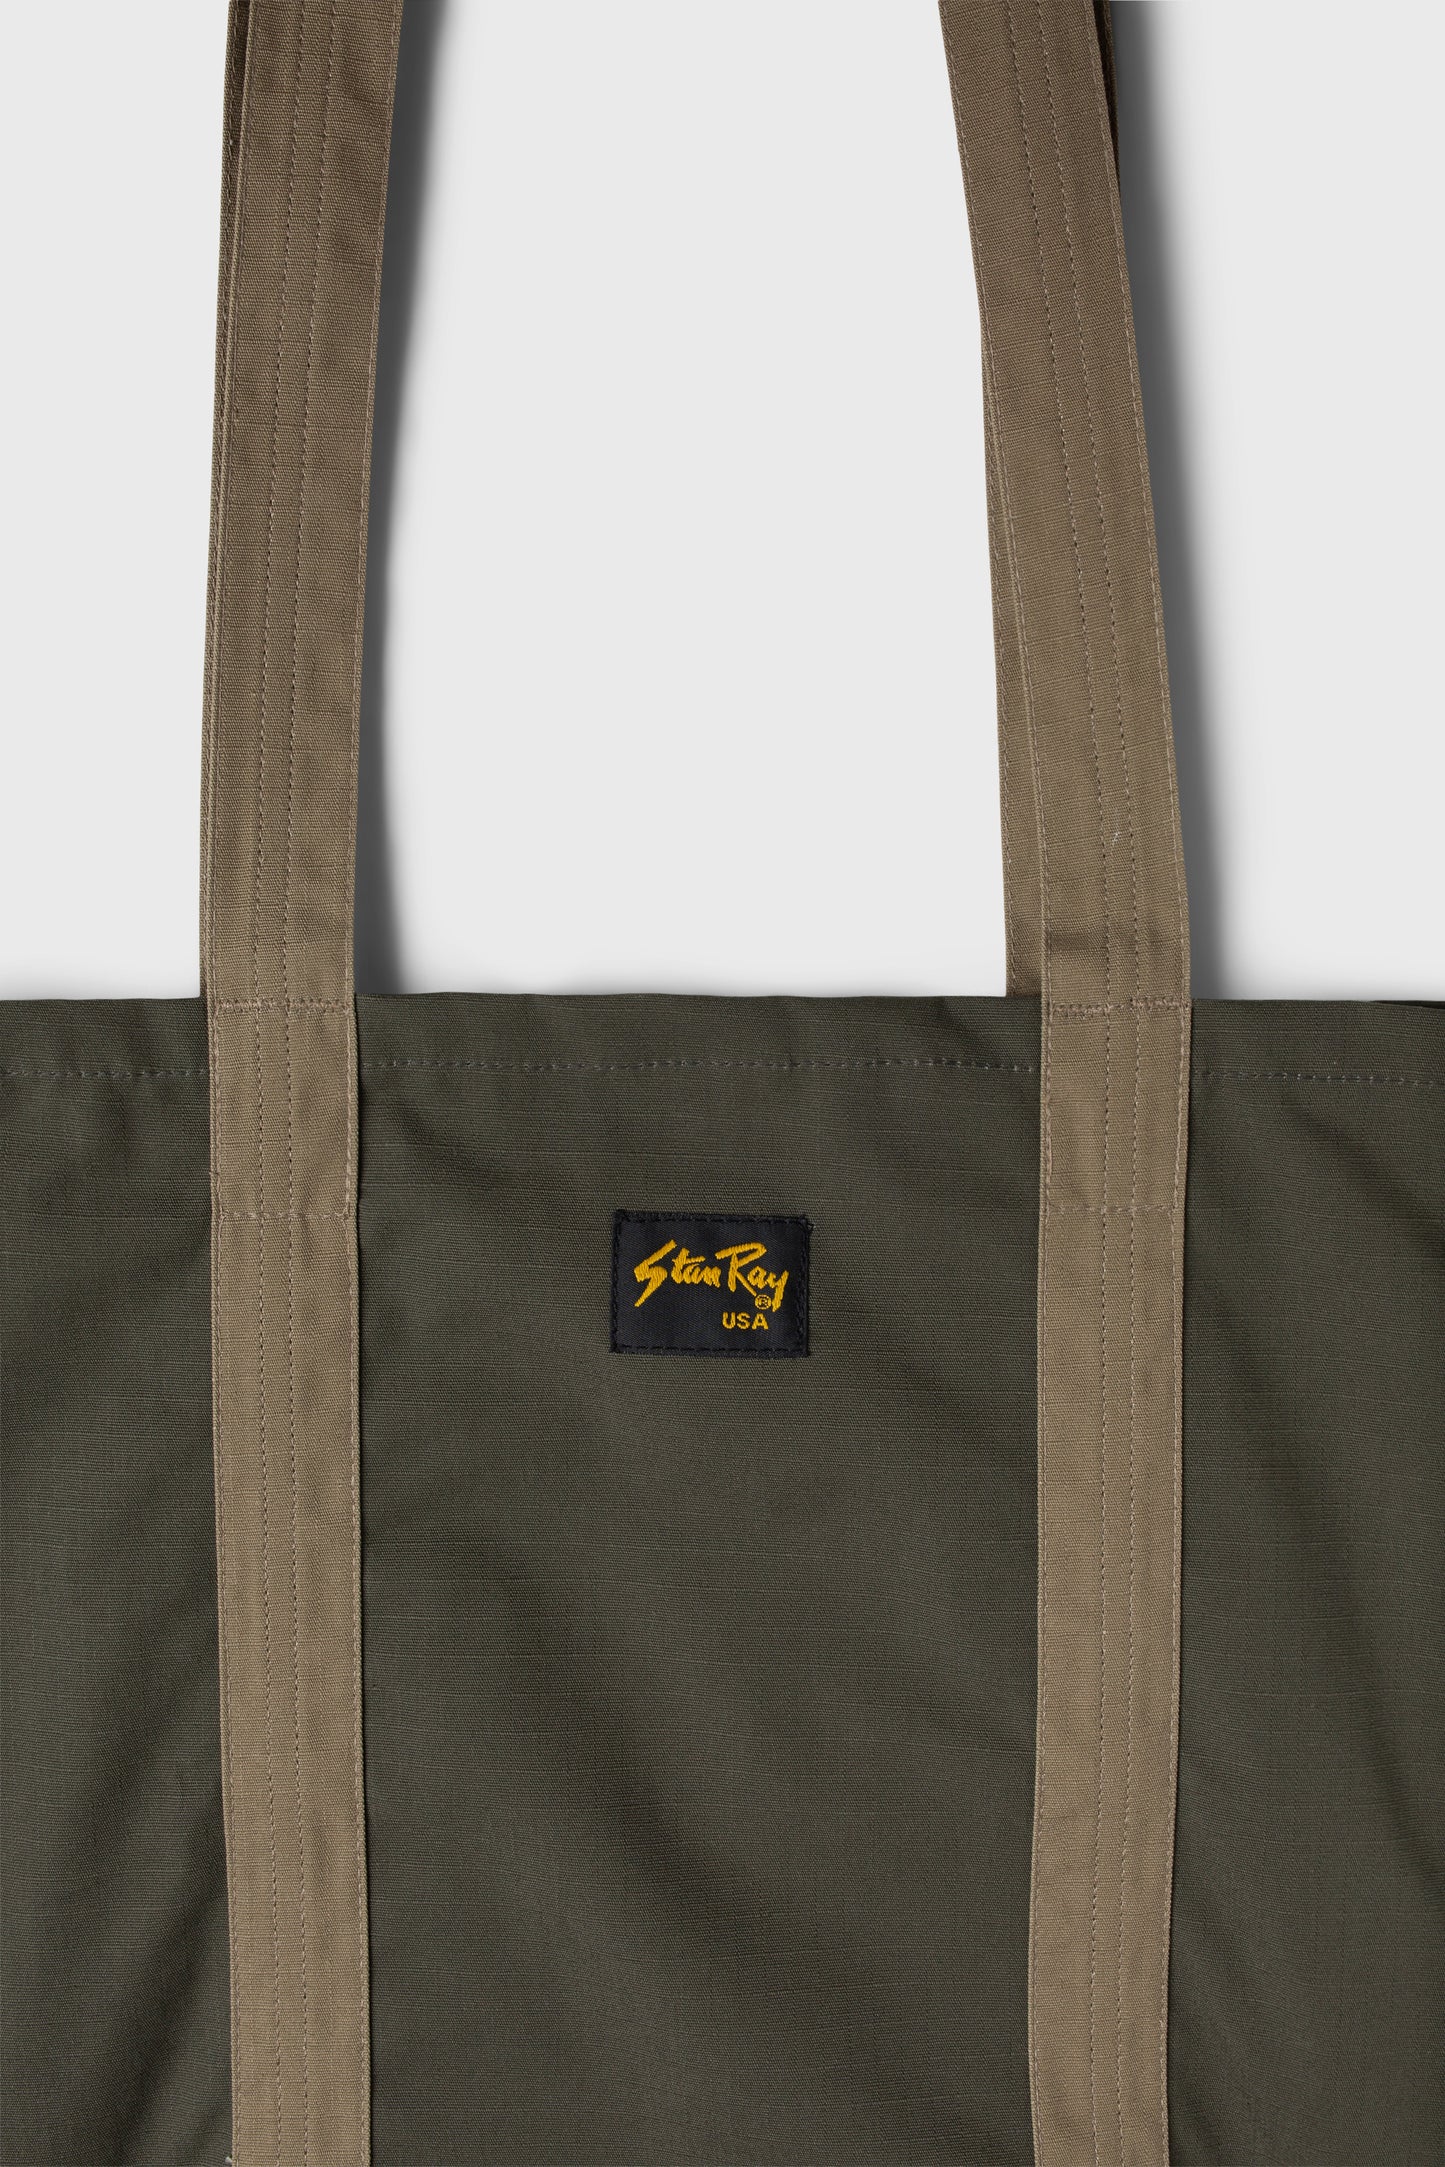 Tote Bag (Olive/Khaki)